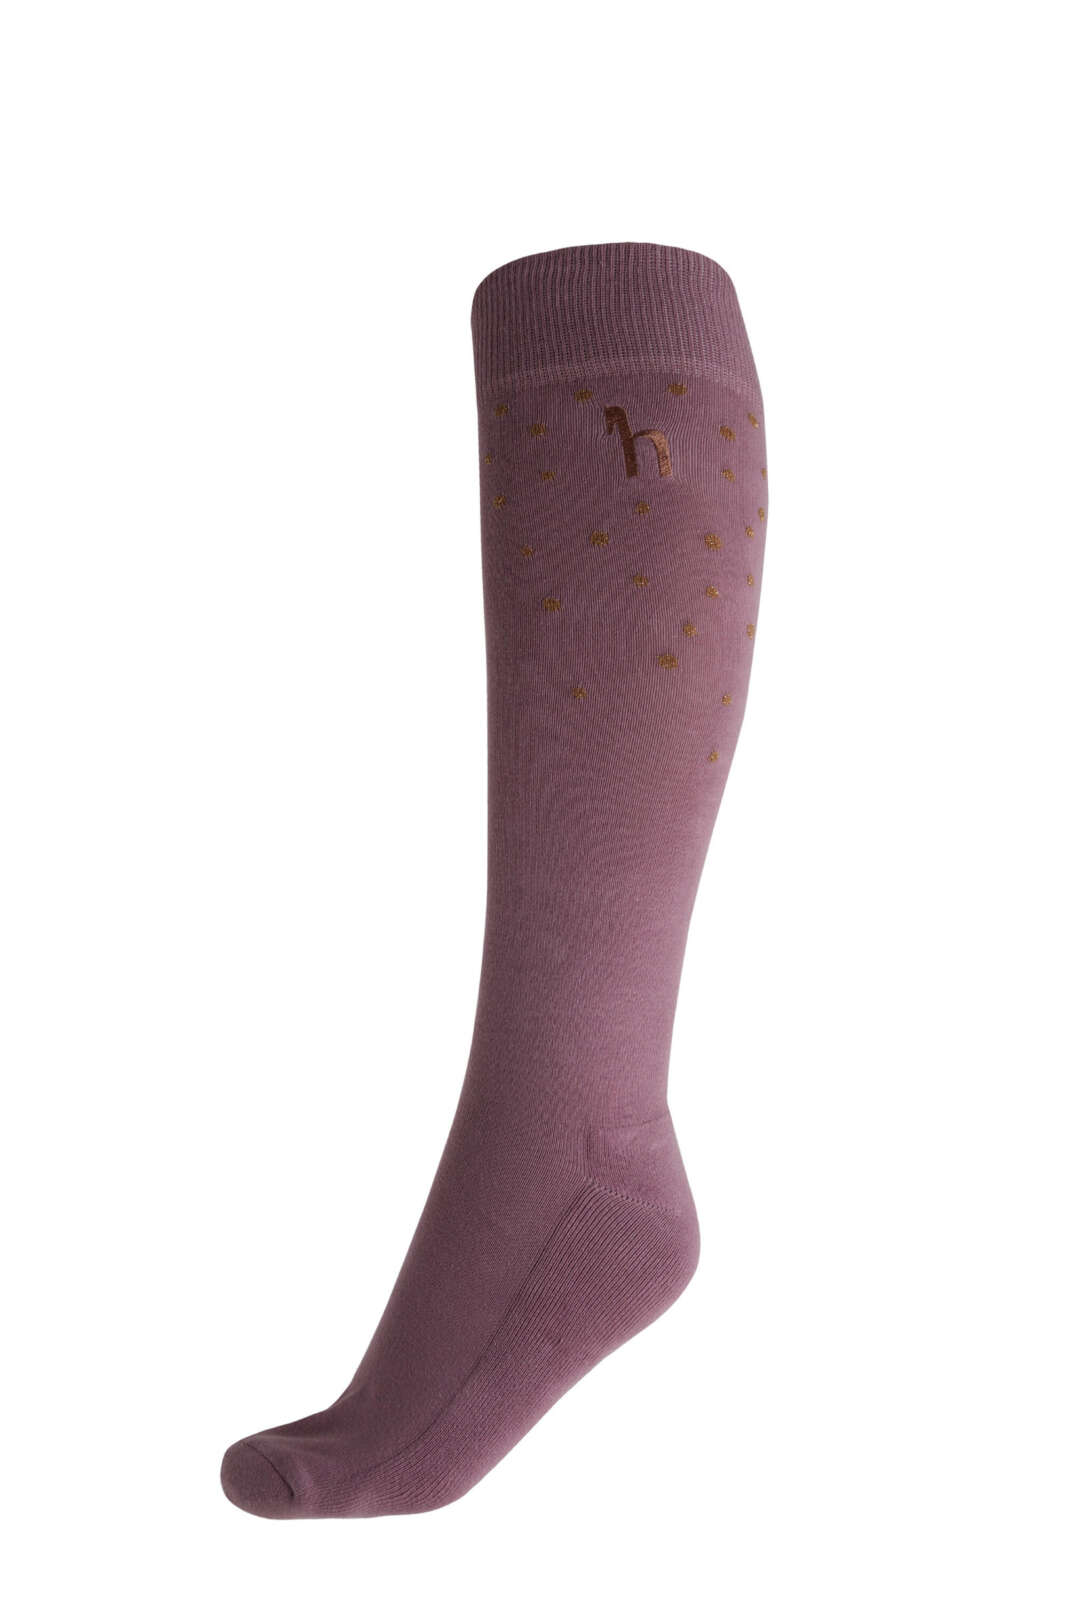 Horze Jordis Ladies’ Socks With Lurex Dots